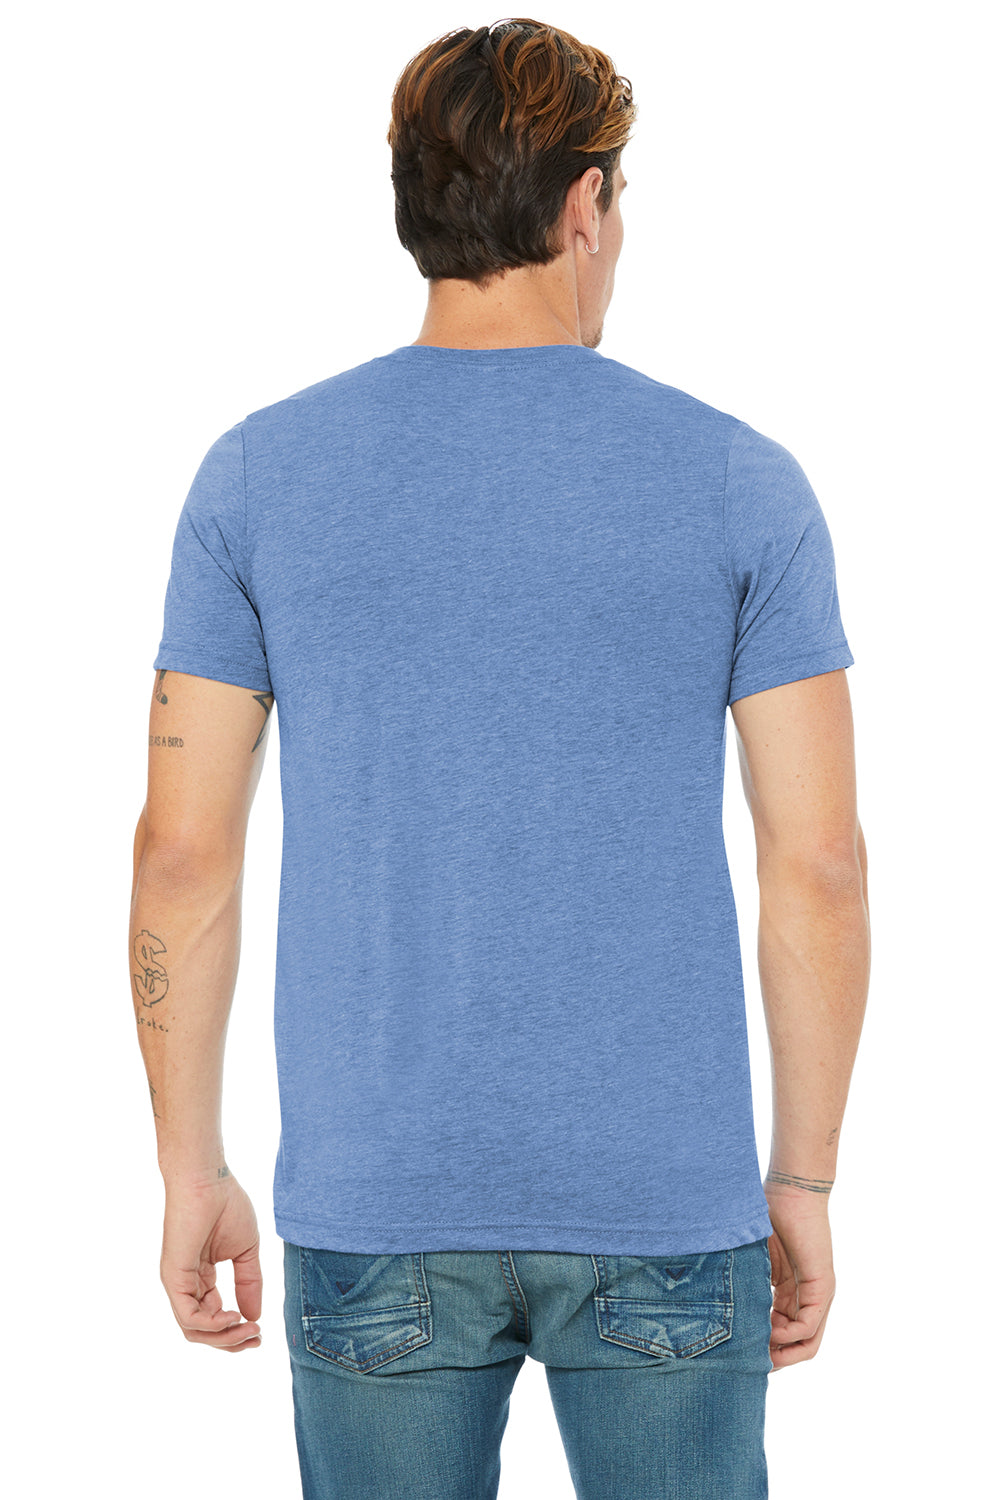 Bella + Canvas BC3415/3415C/3415 Mens Short Sleeve V-Neck T-Shirt Blue Model Back